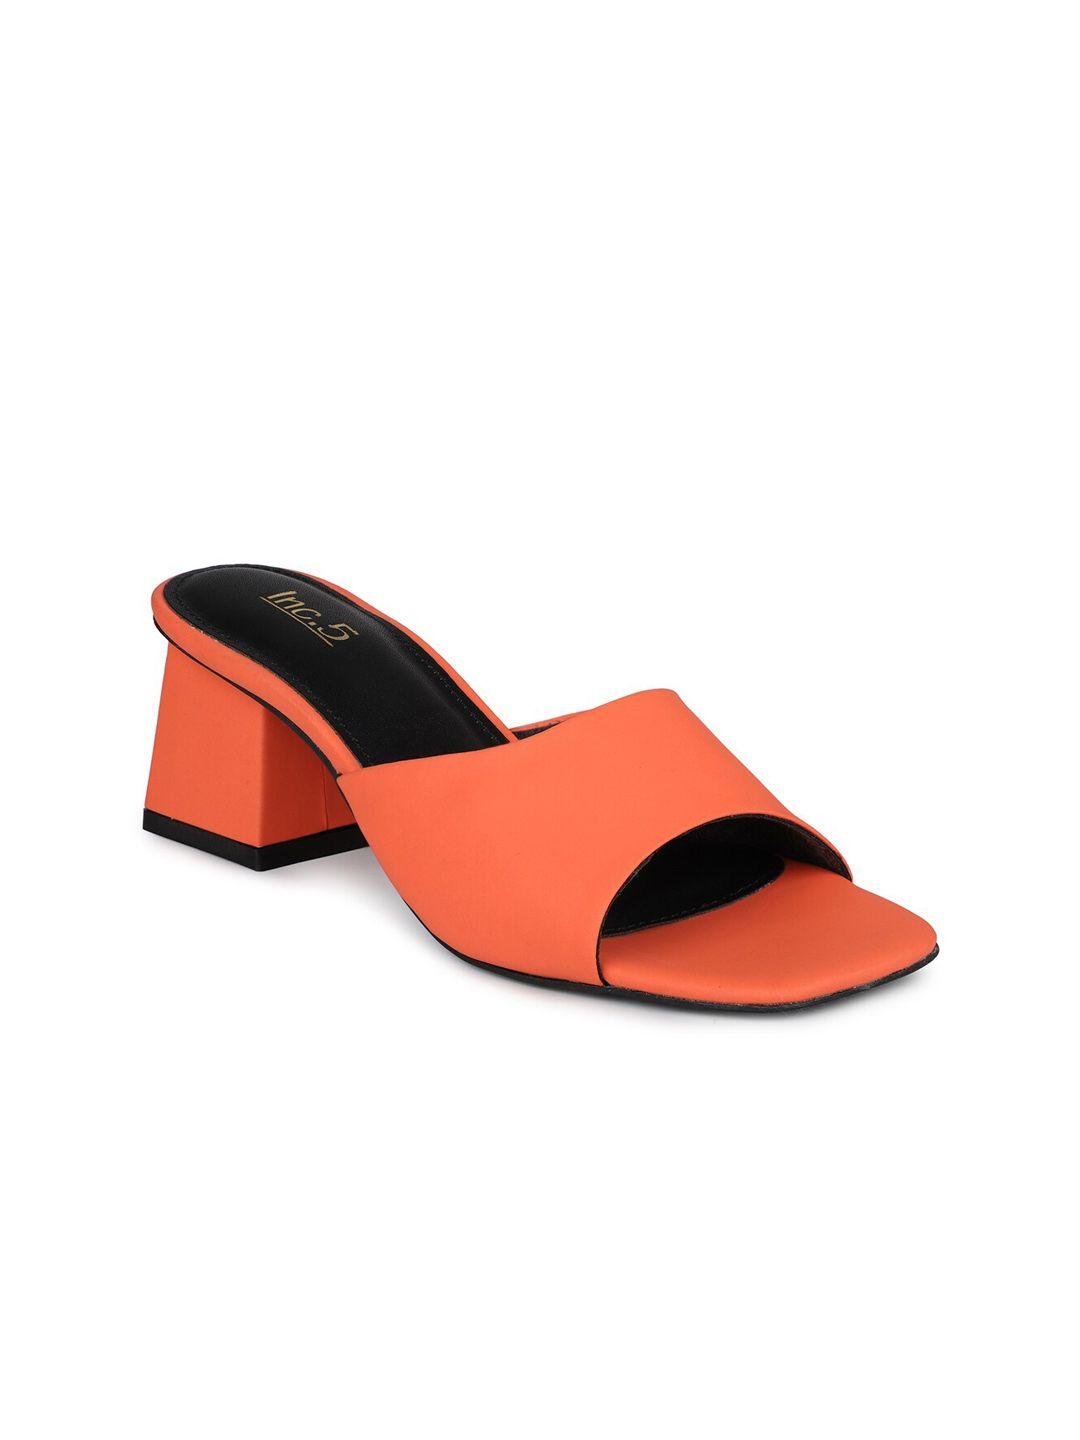 inc 5 women orange solid block sandals